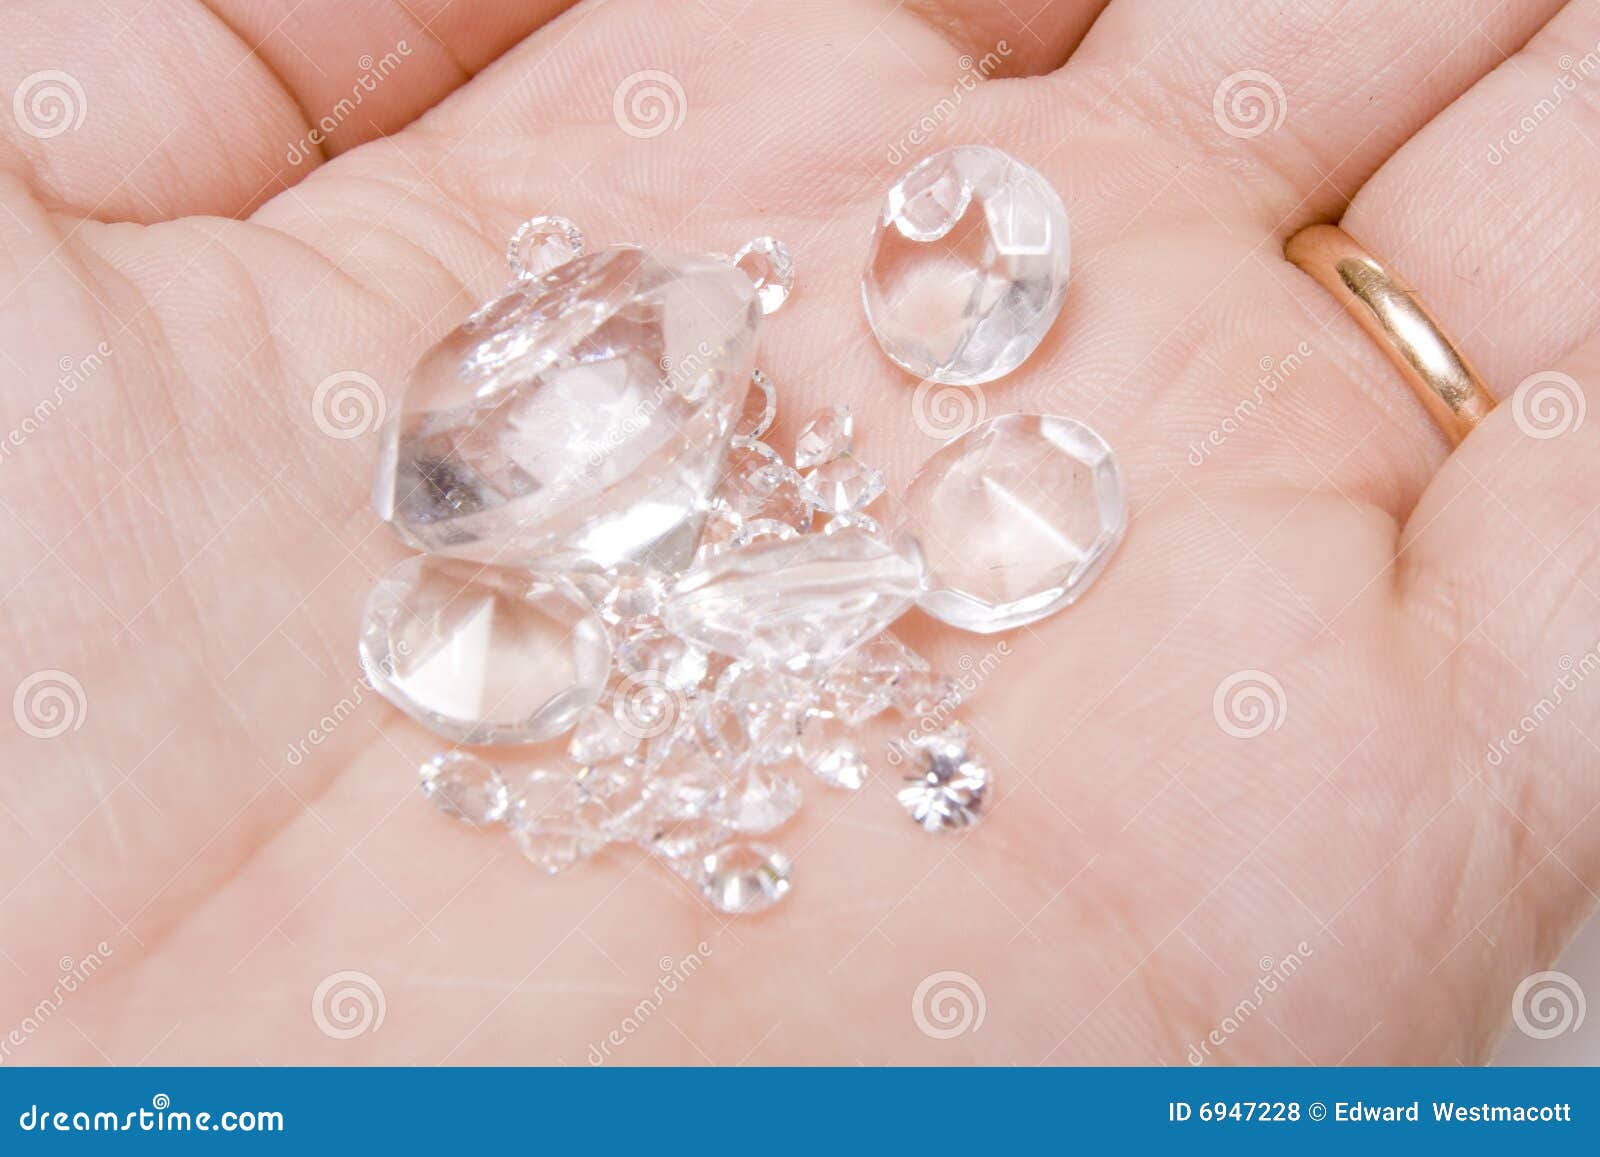 handful of diamonds